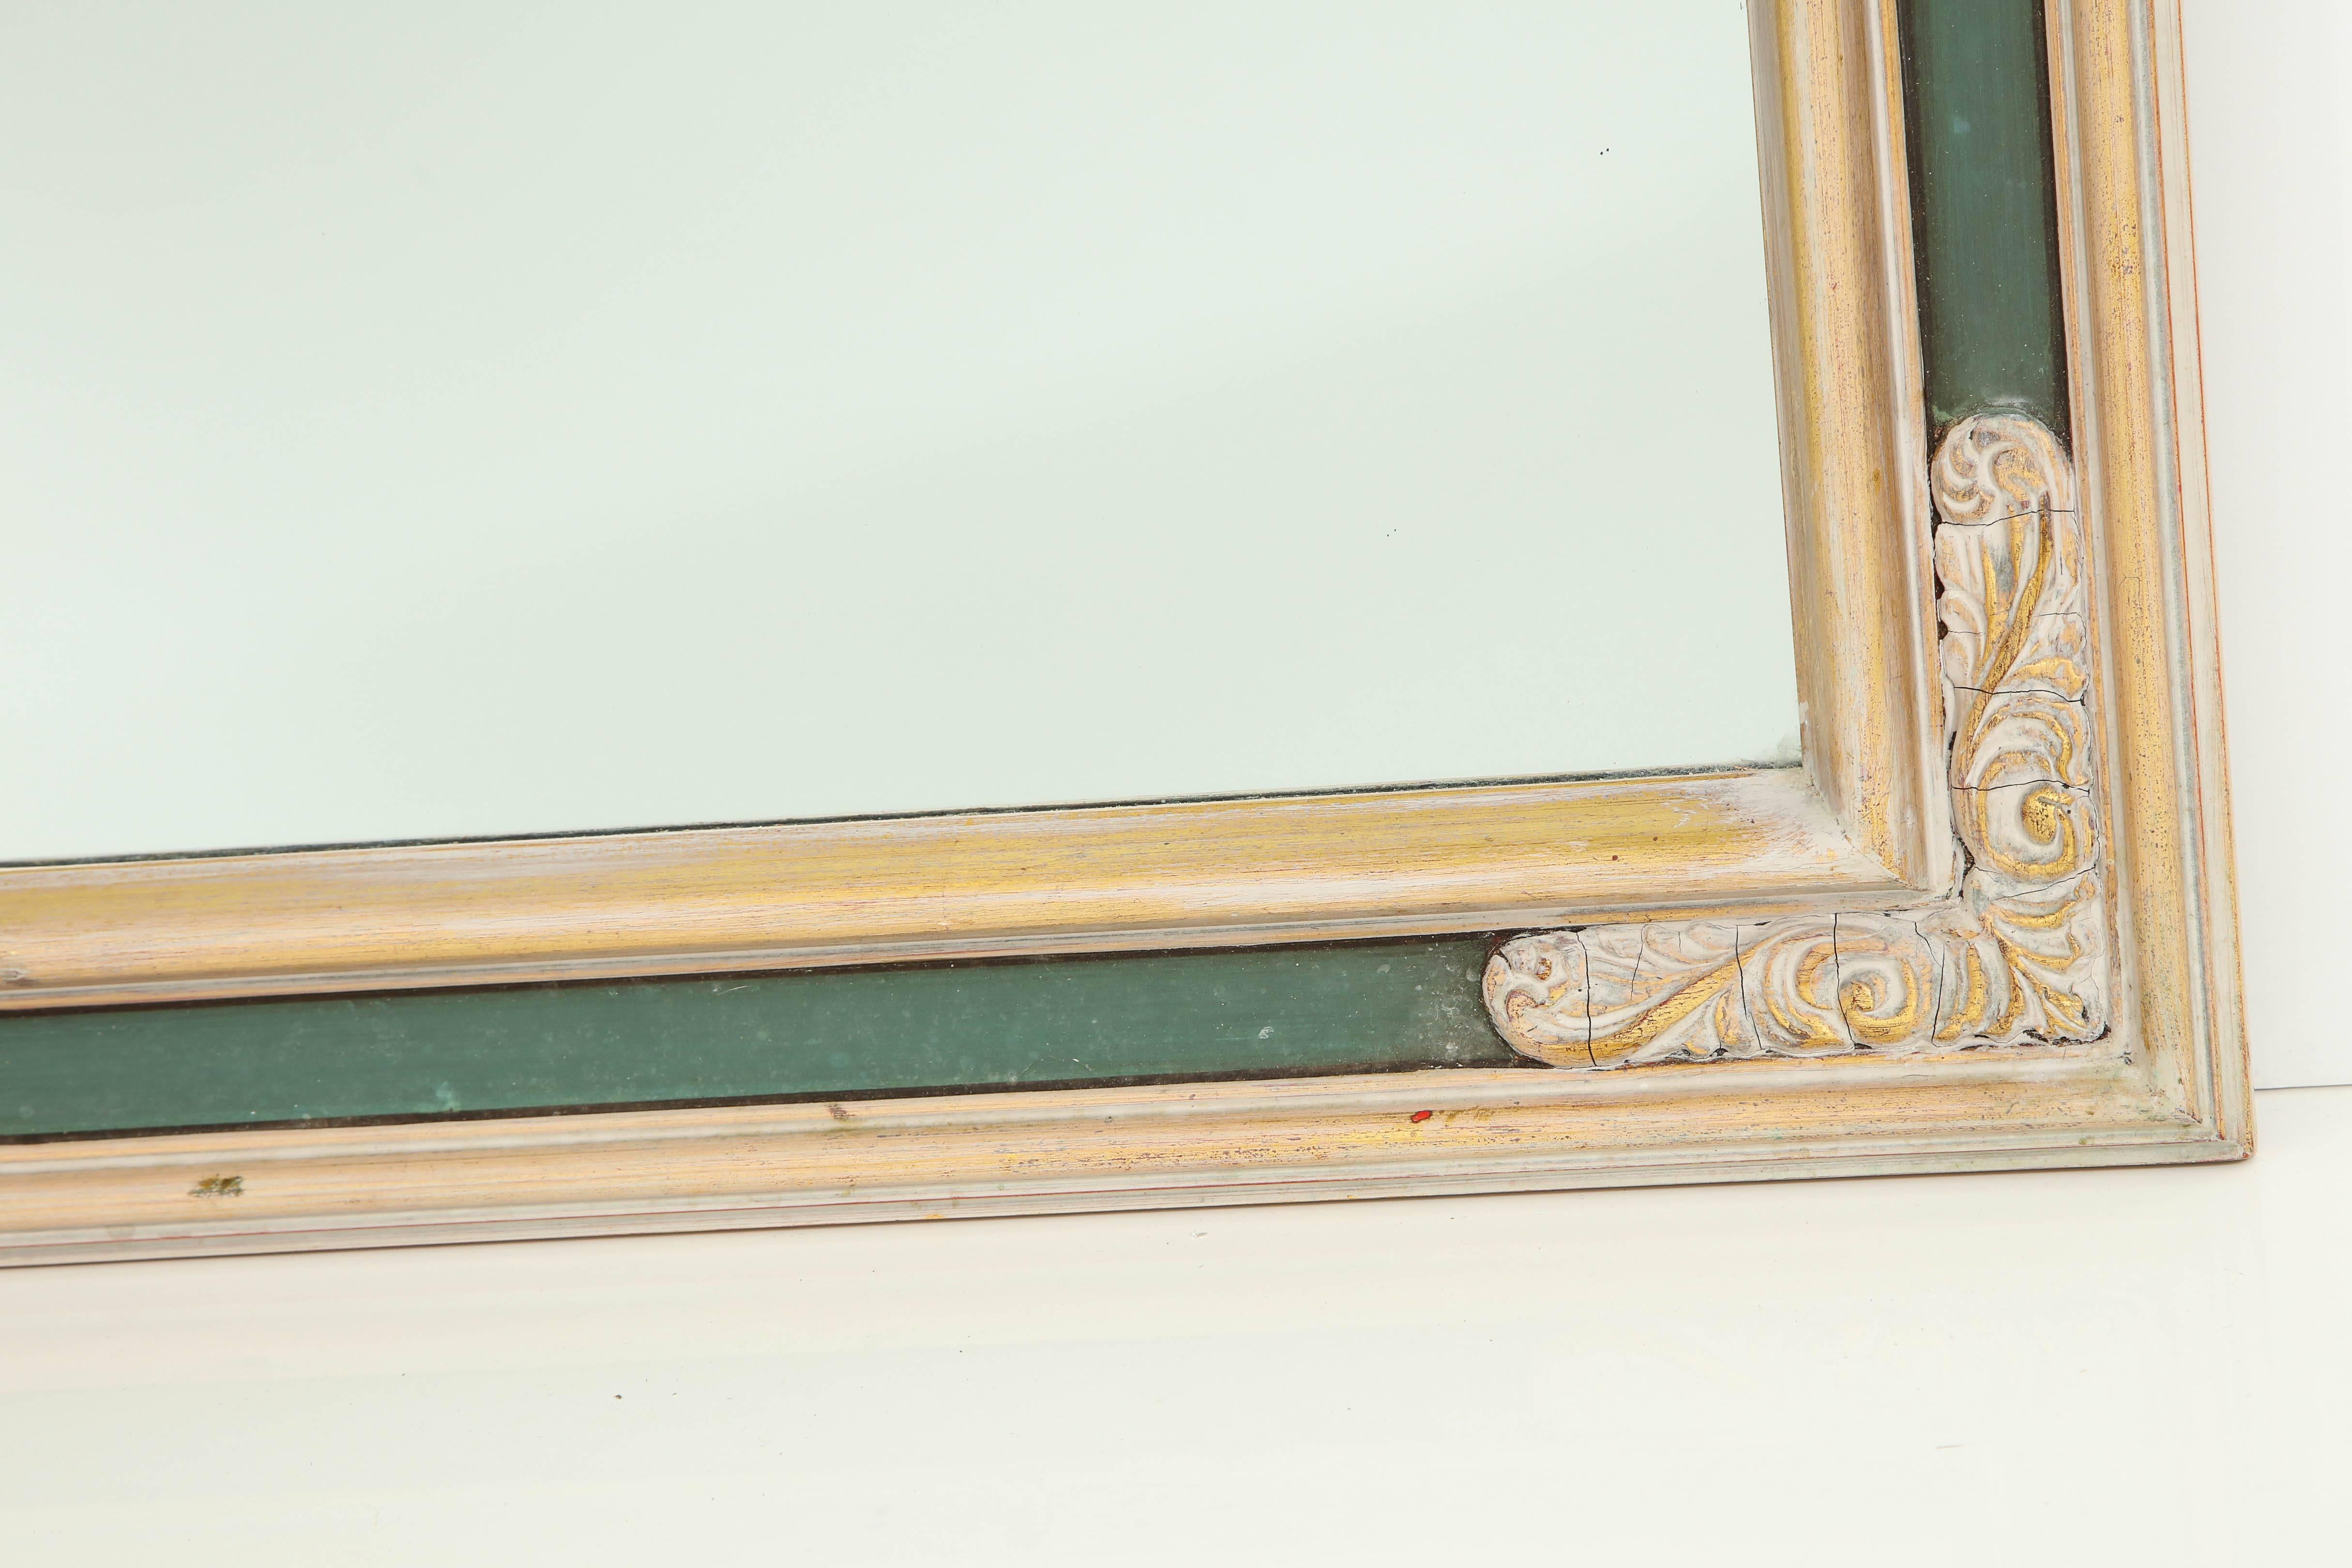 Decorative Hollywood Regency style mirror by La Barge.